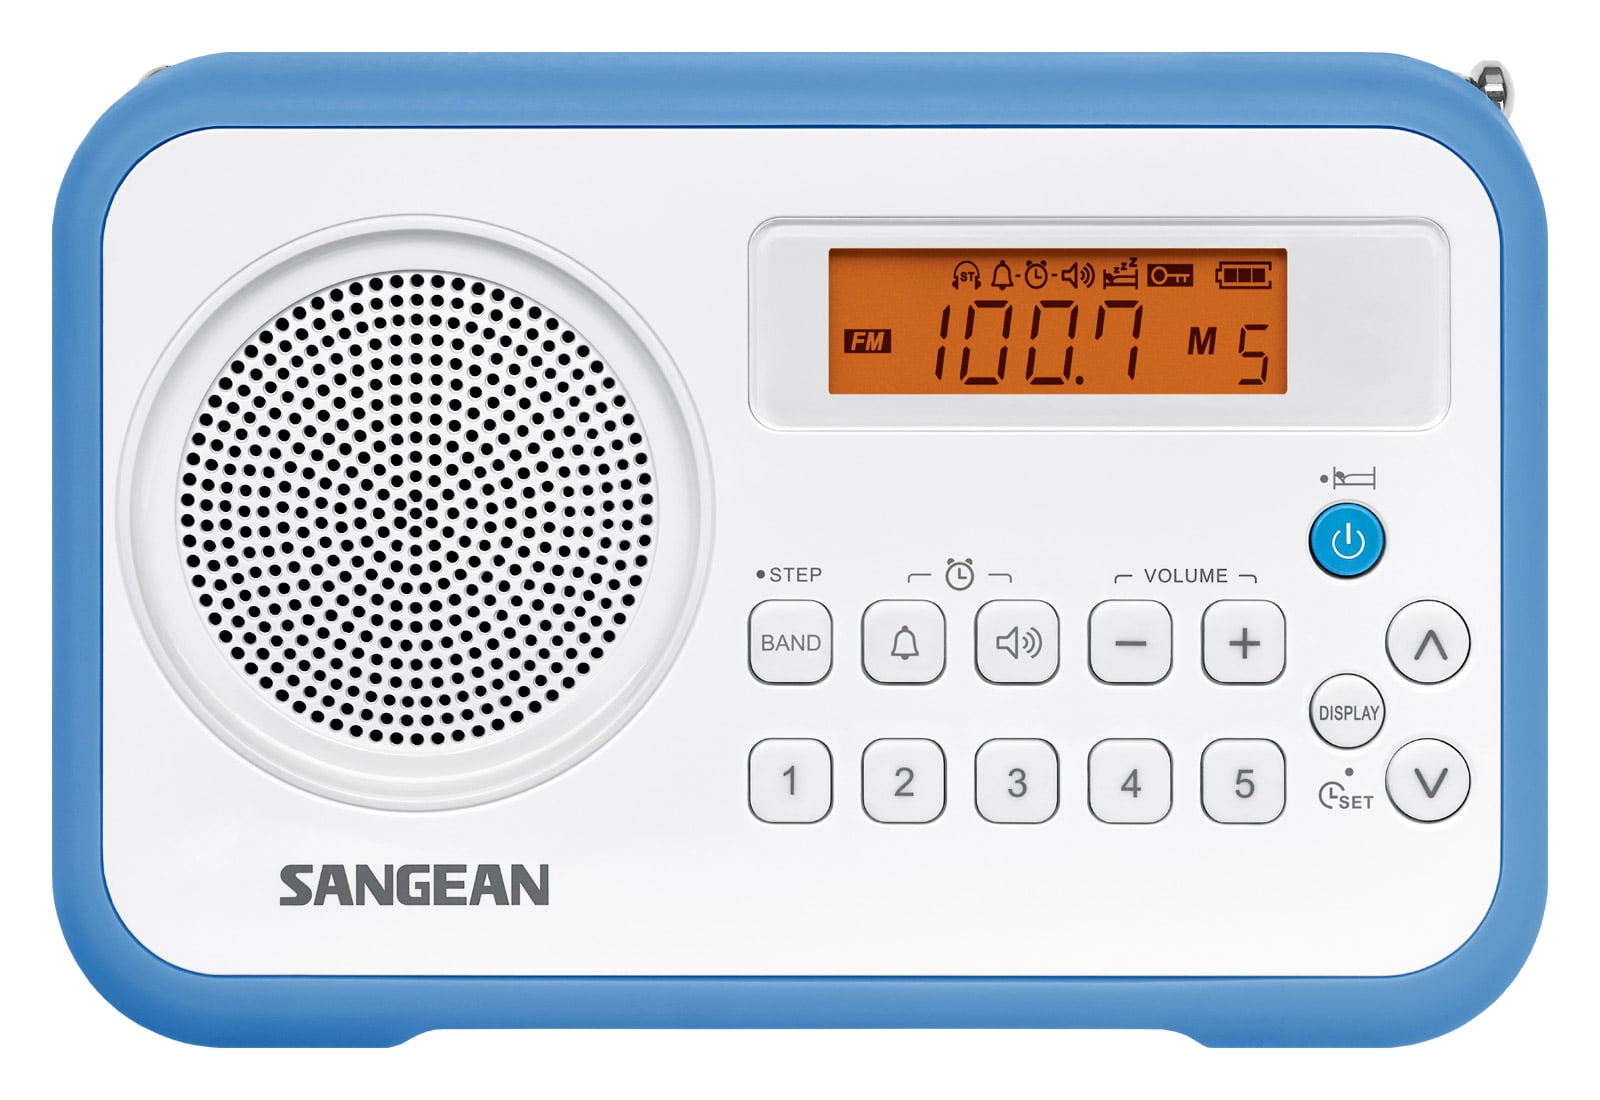 Sangean Digital Compact AM/FM Alarm Clock with Built-in Speaker Large Easy to Read Backlit Display - Walmart.com